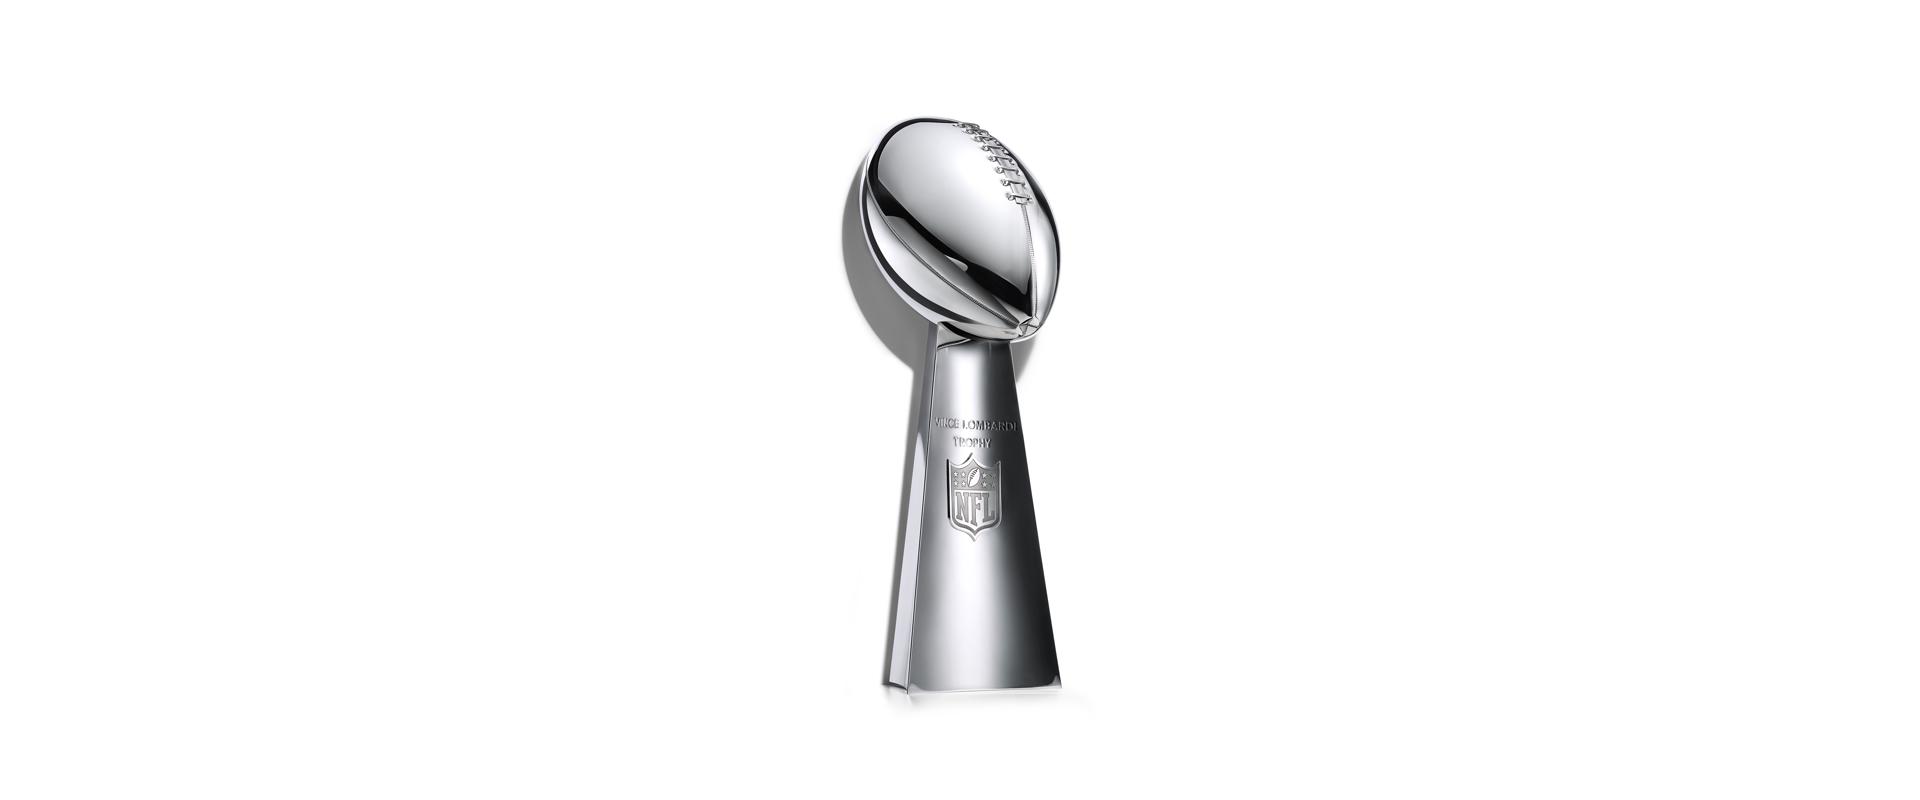 Kansas City Chiefs Ambassadors receiving Super Bowl LVII rings - A